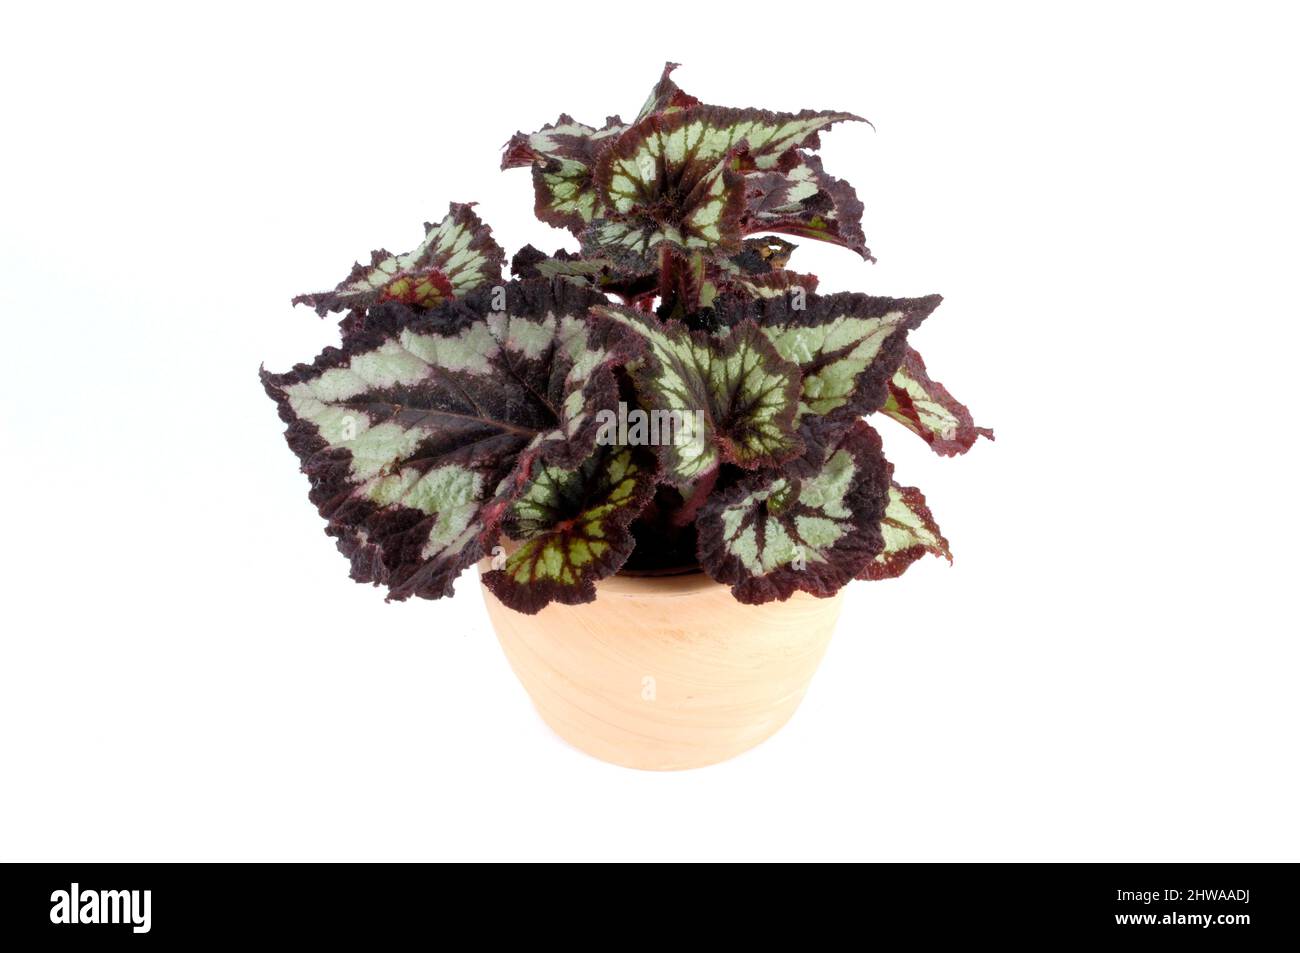 Begonia cultivar immagini e fotografie stock ad alta risoluzione - Alamy